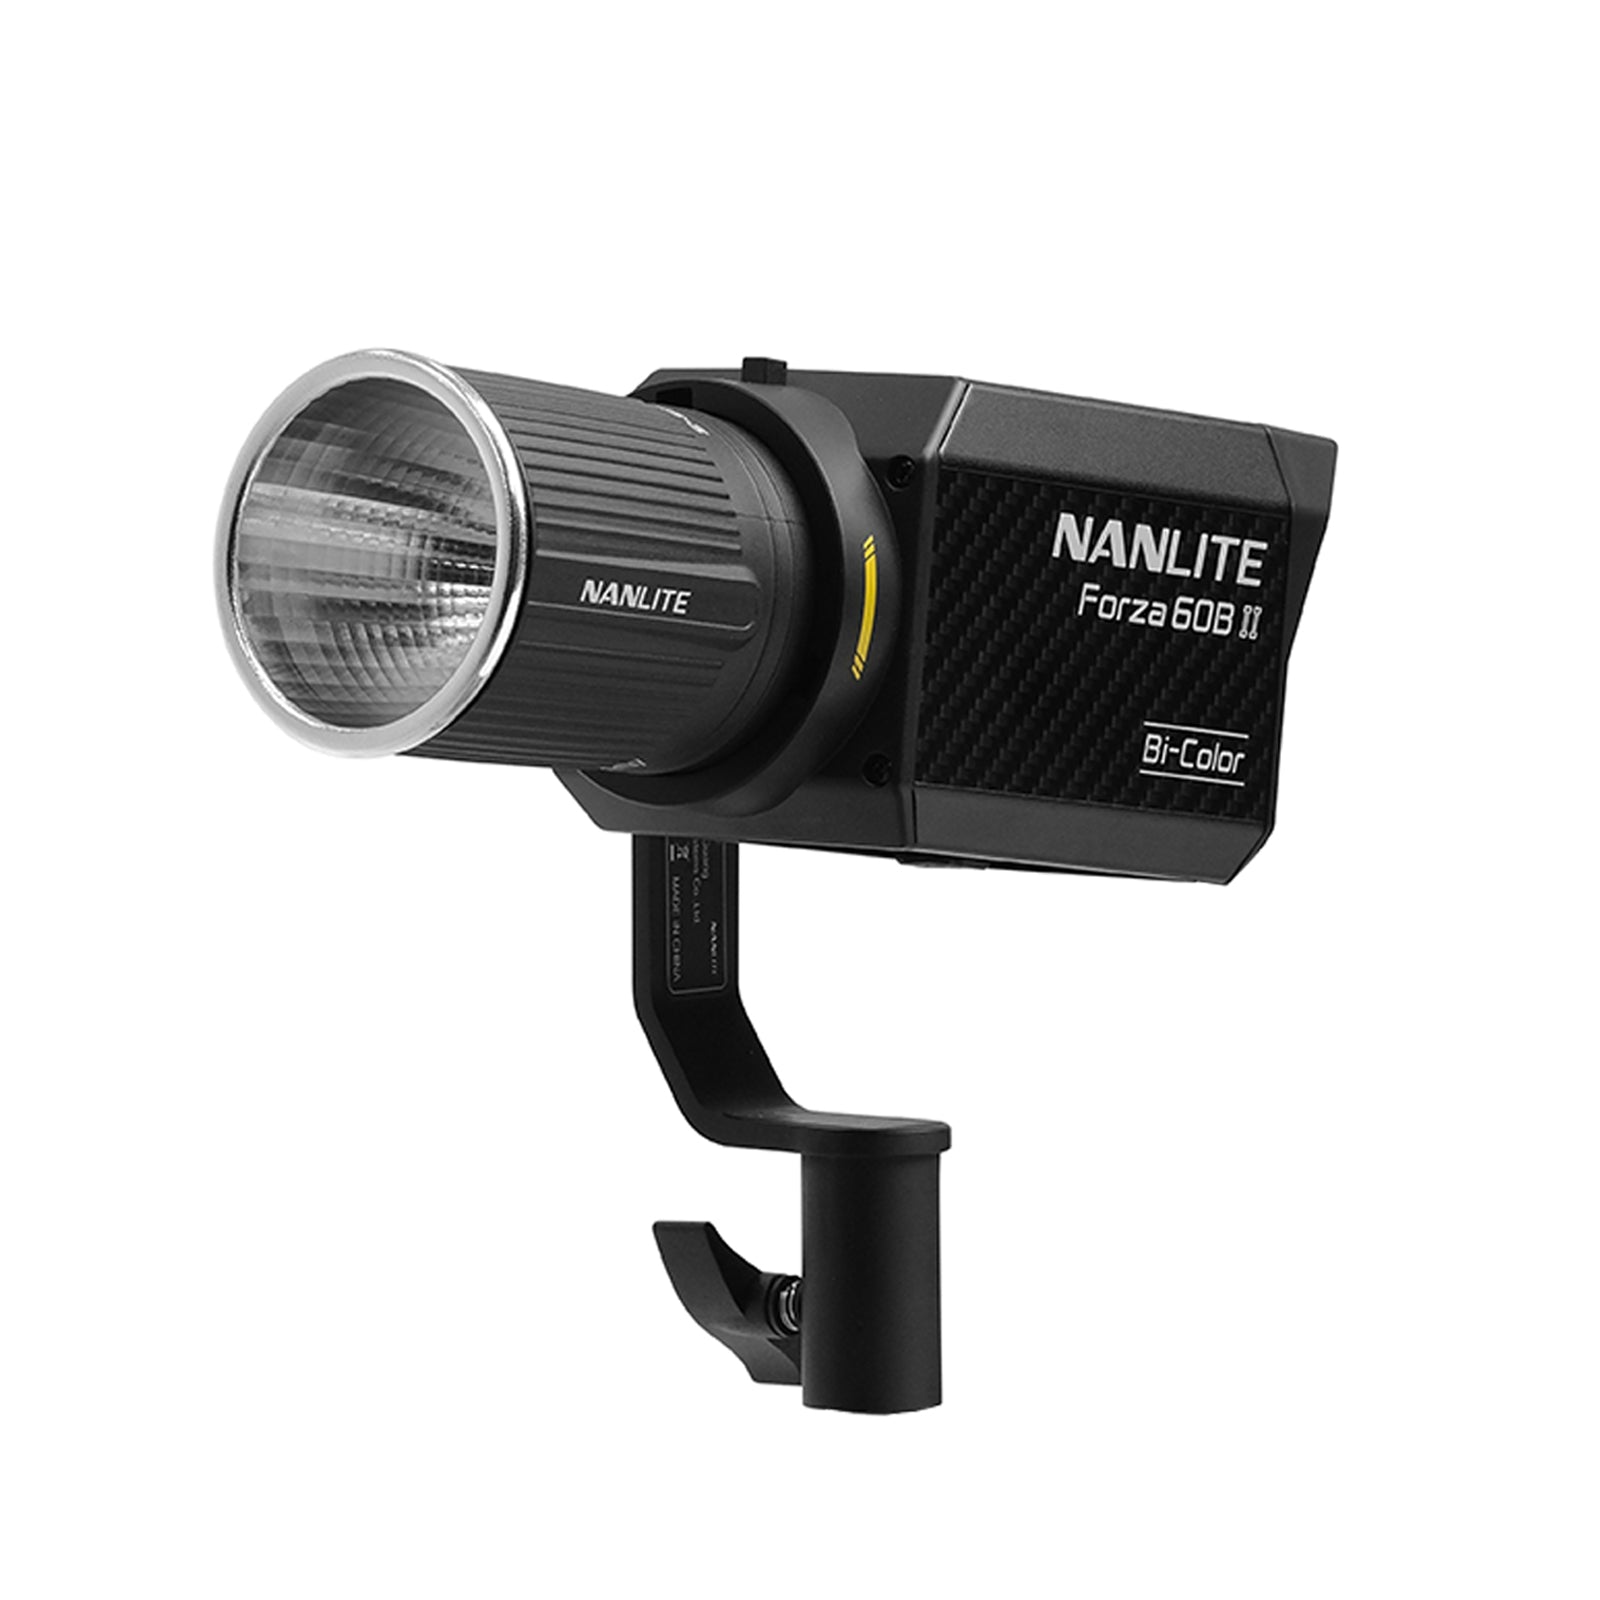 NANLITE Forza 60B II 撮影用ライト スタジオライト LEDライト バイカラー 色温度2700-6500K 72W CRI96  国内正規品